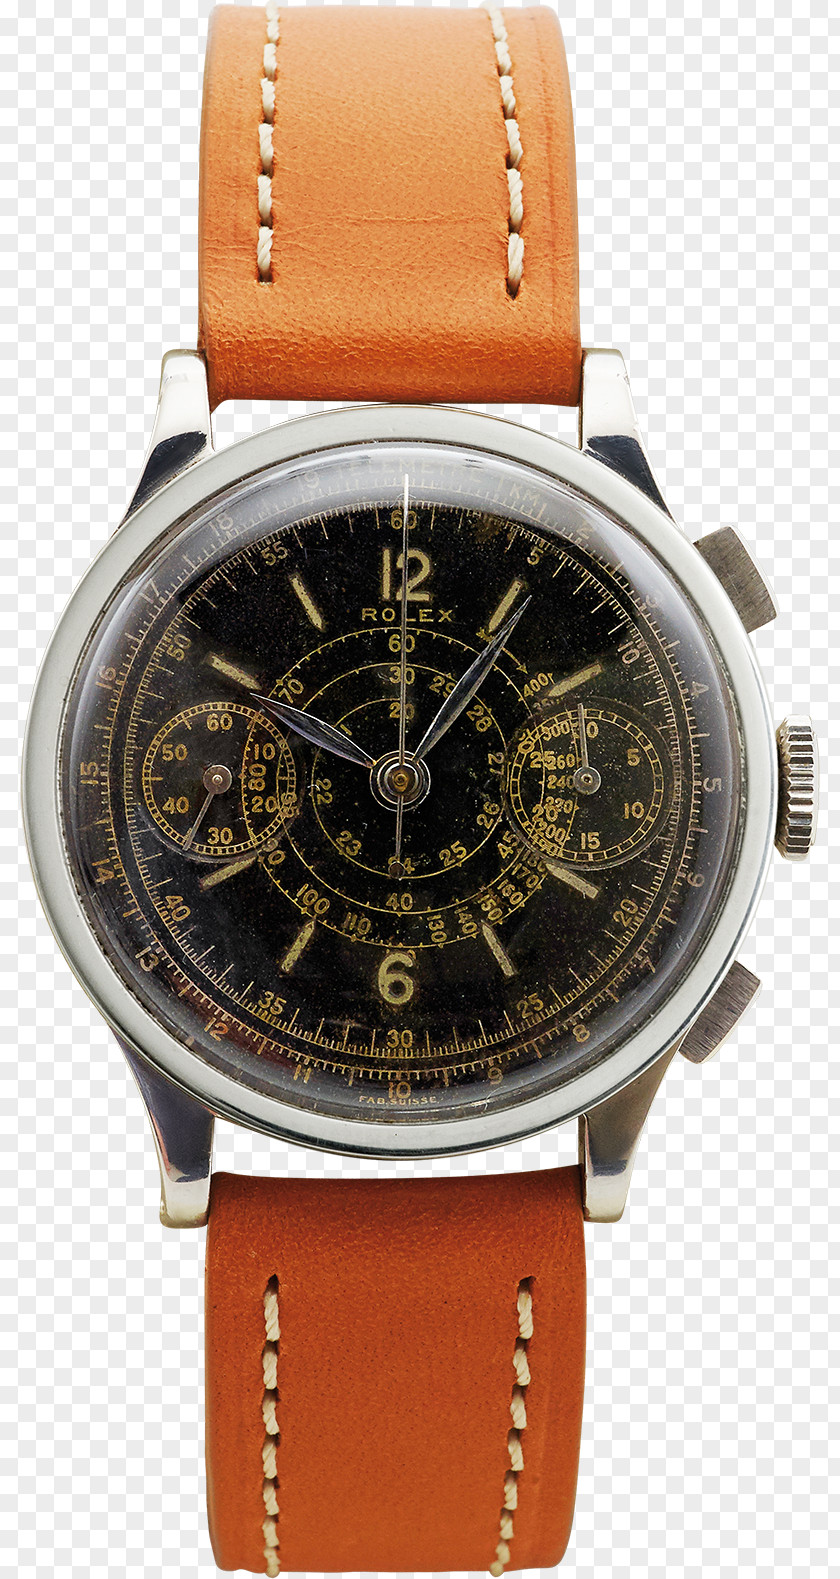 Rolex Milgauss Submariner Watch Chronograph PNG